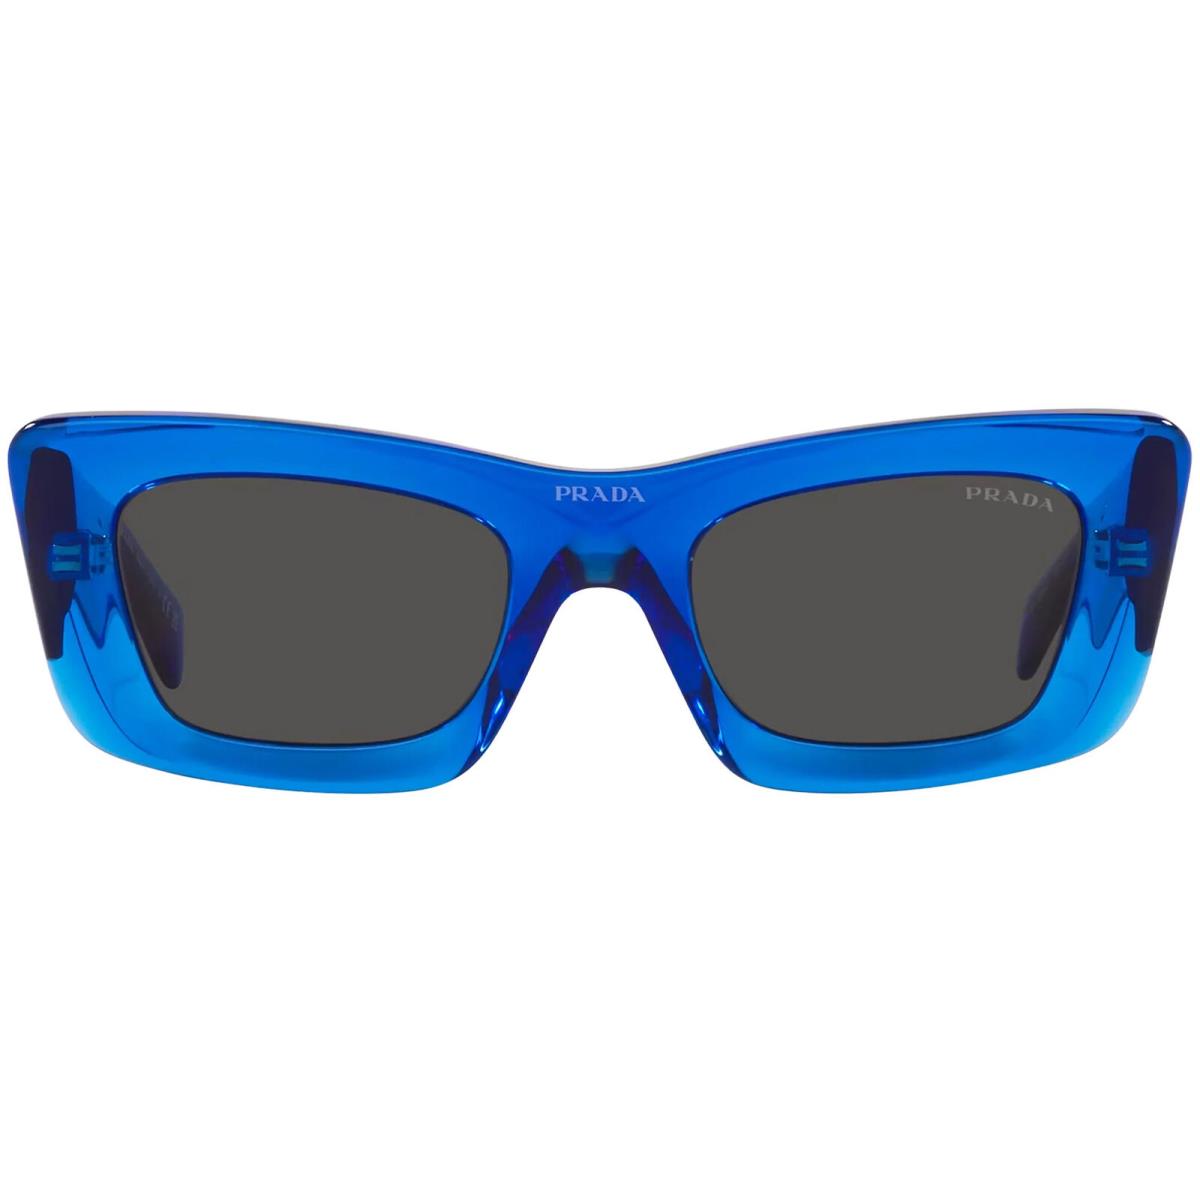 Prada Women`s Electric Blue Chunky Cat Eye Sunglasses - PR13ZS 18M5S0 50 - Italy